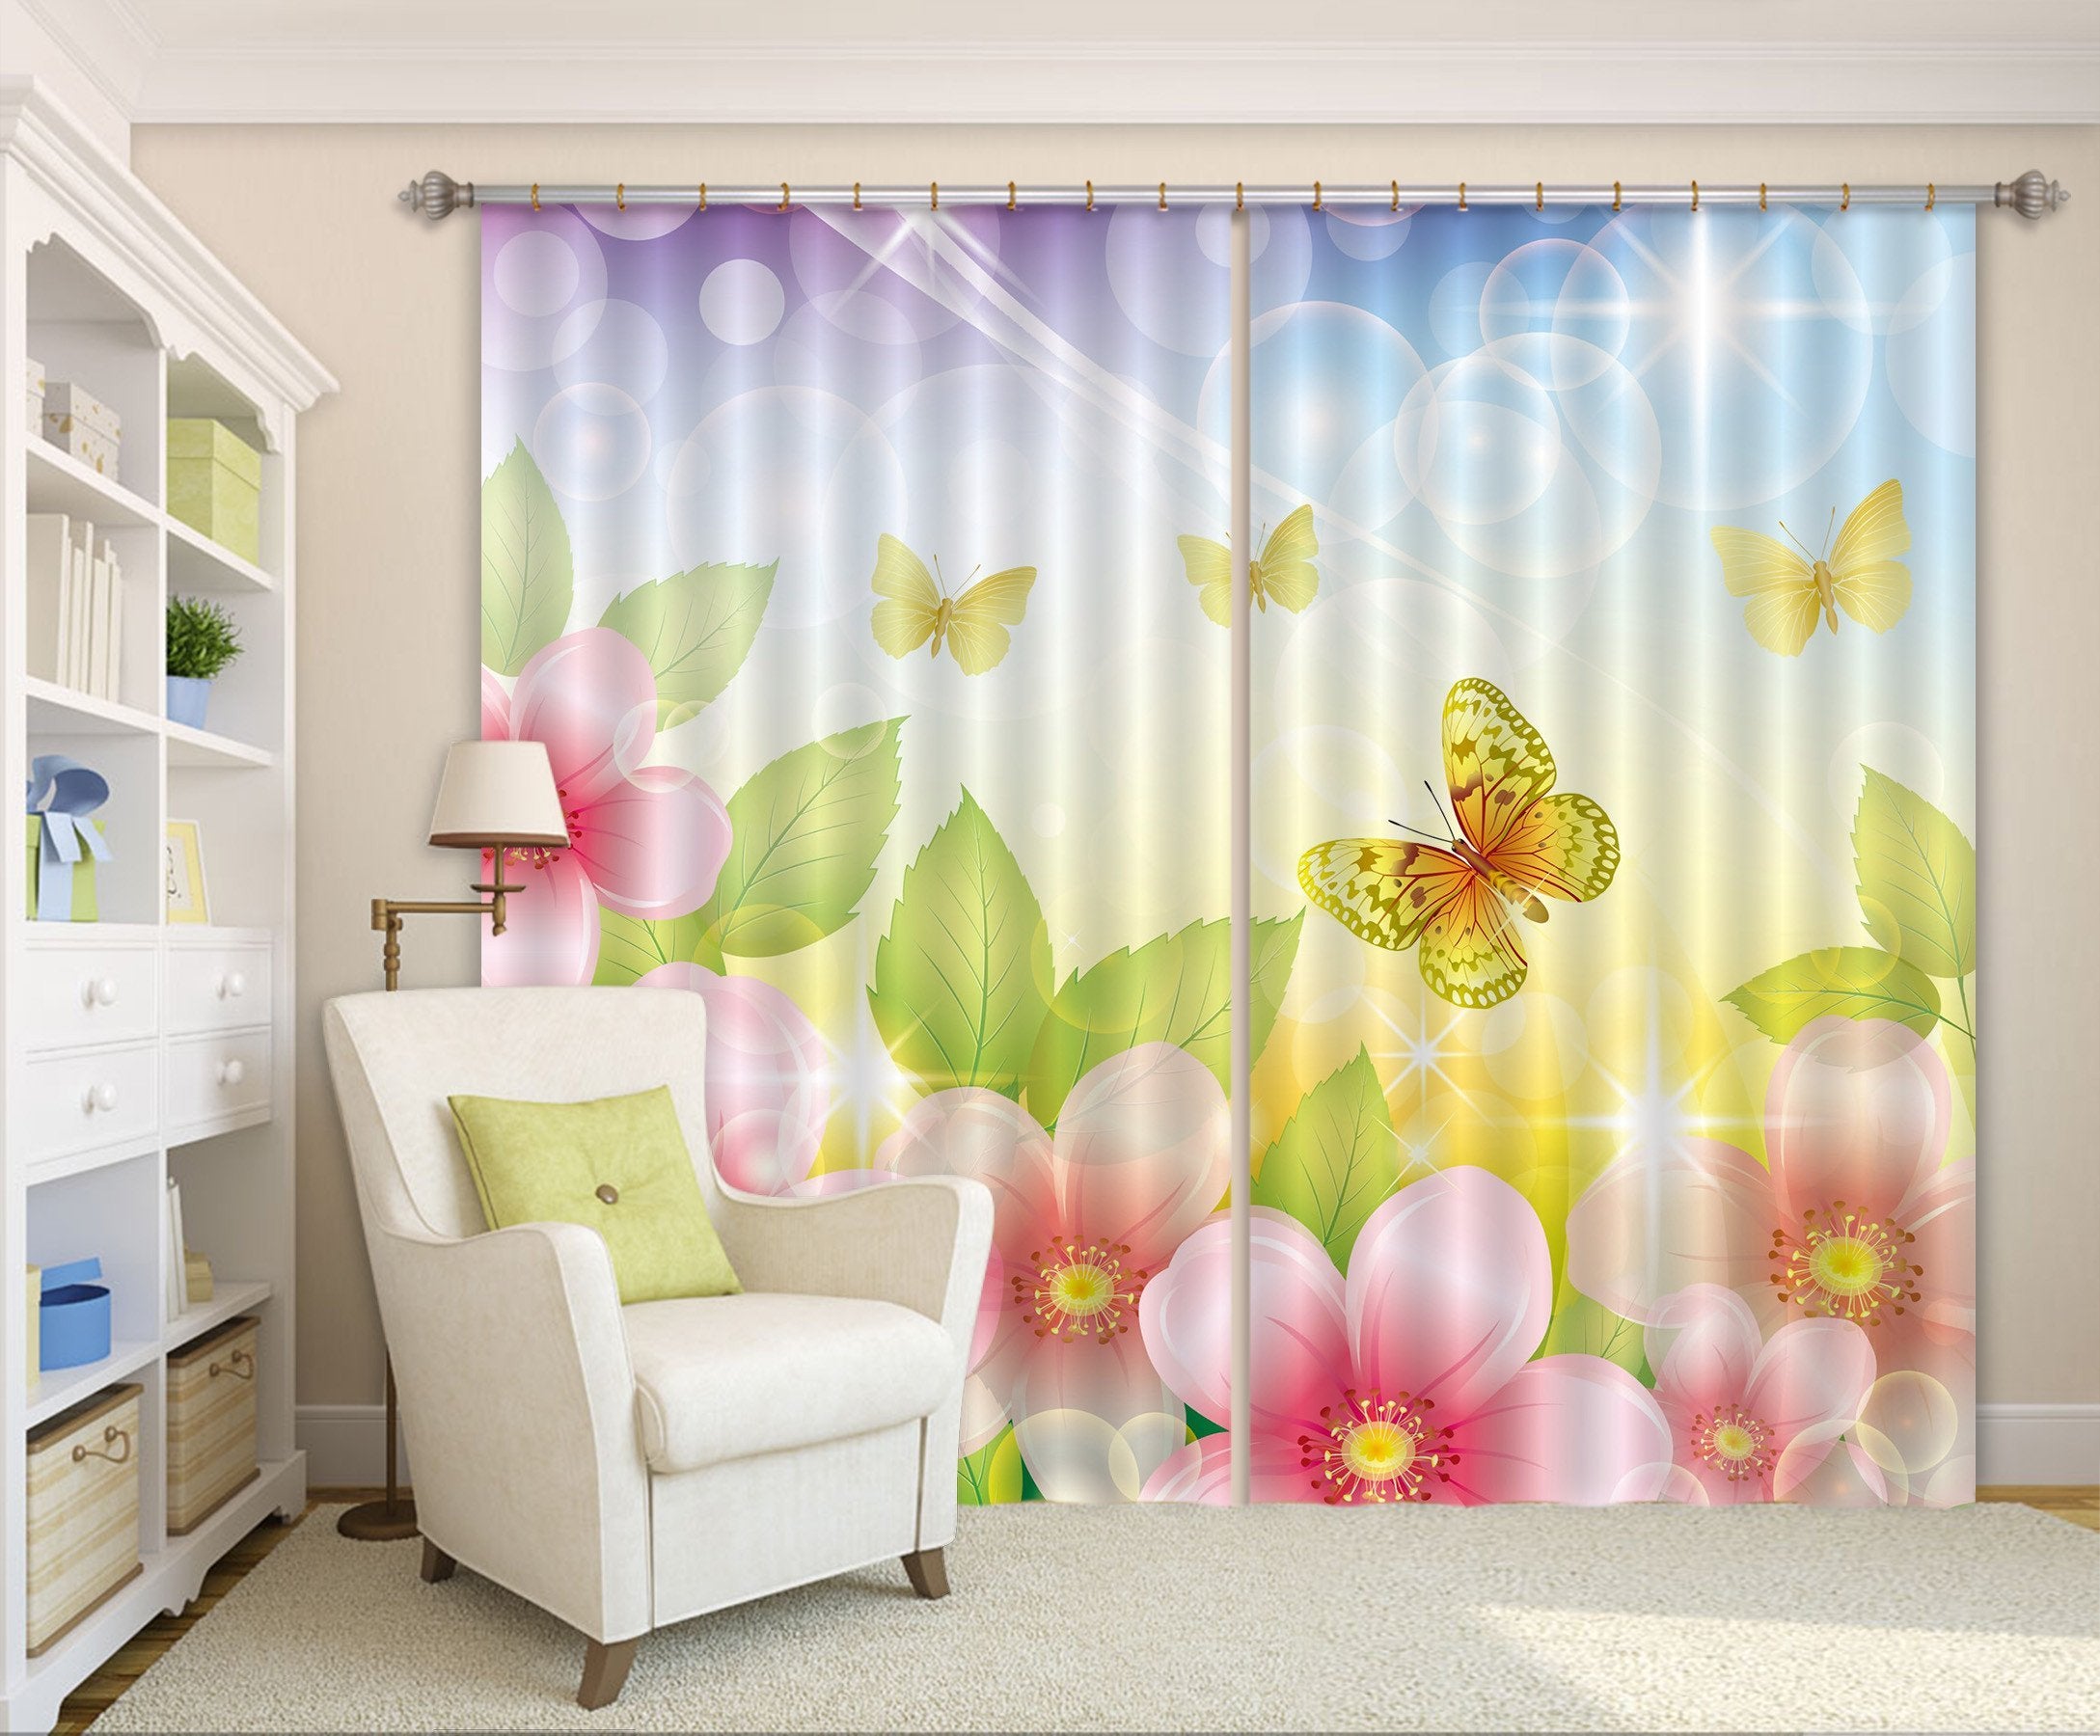 3D Flowers And Butterflies 257 Curtains Drapes Wallpaper AJ Wallpaper 